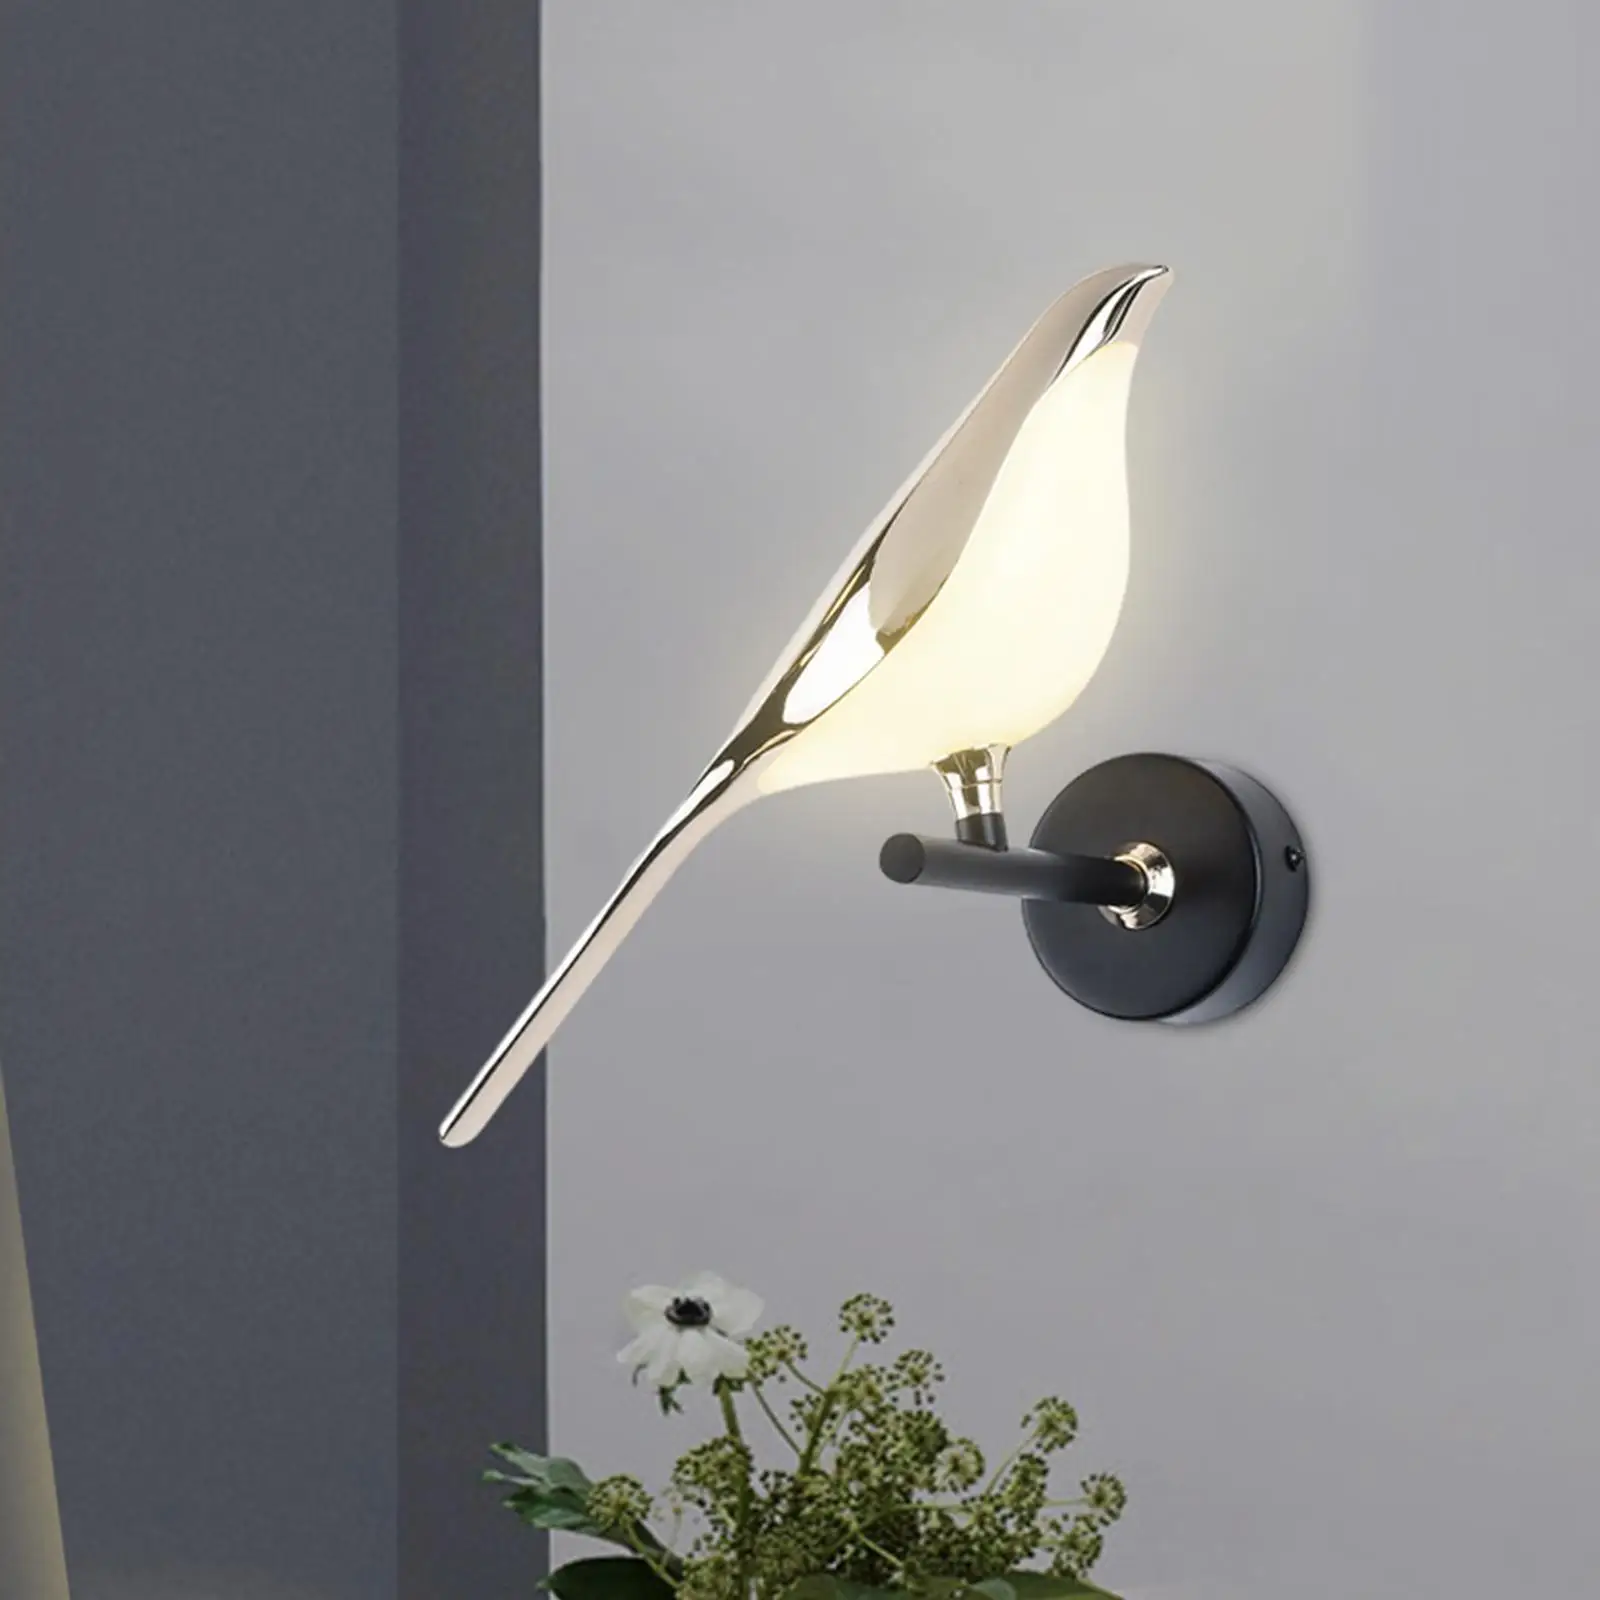 Pendant Light Ceiling Light Industrial Lighting Fixture Light Chandelier for Cafe